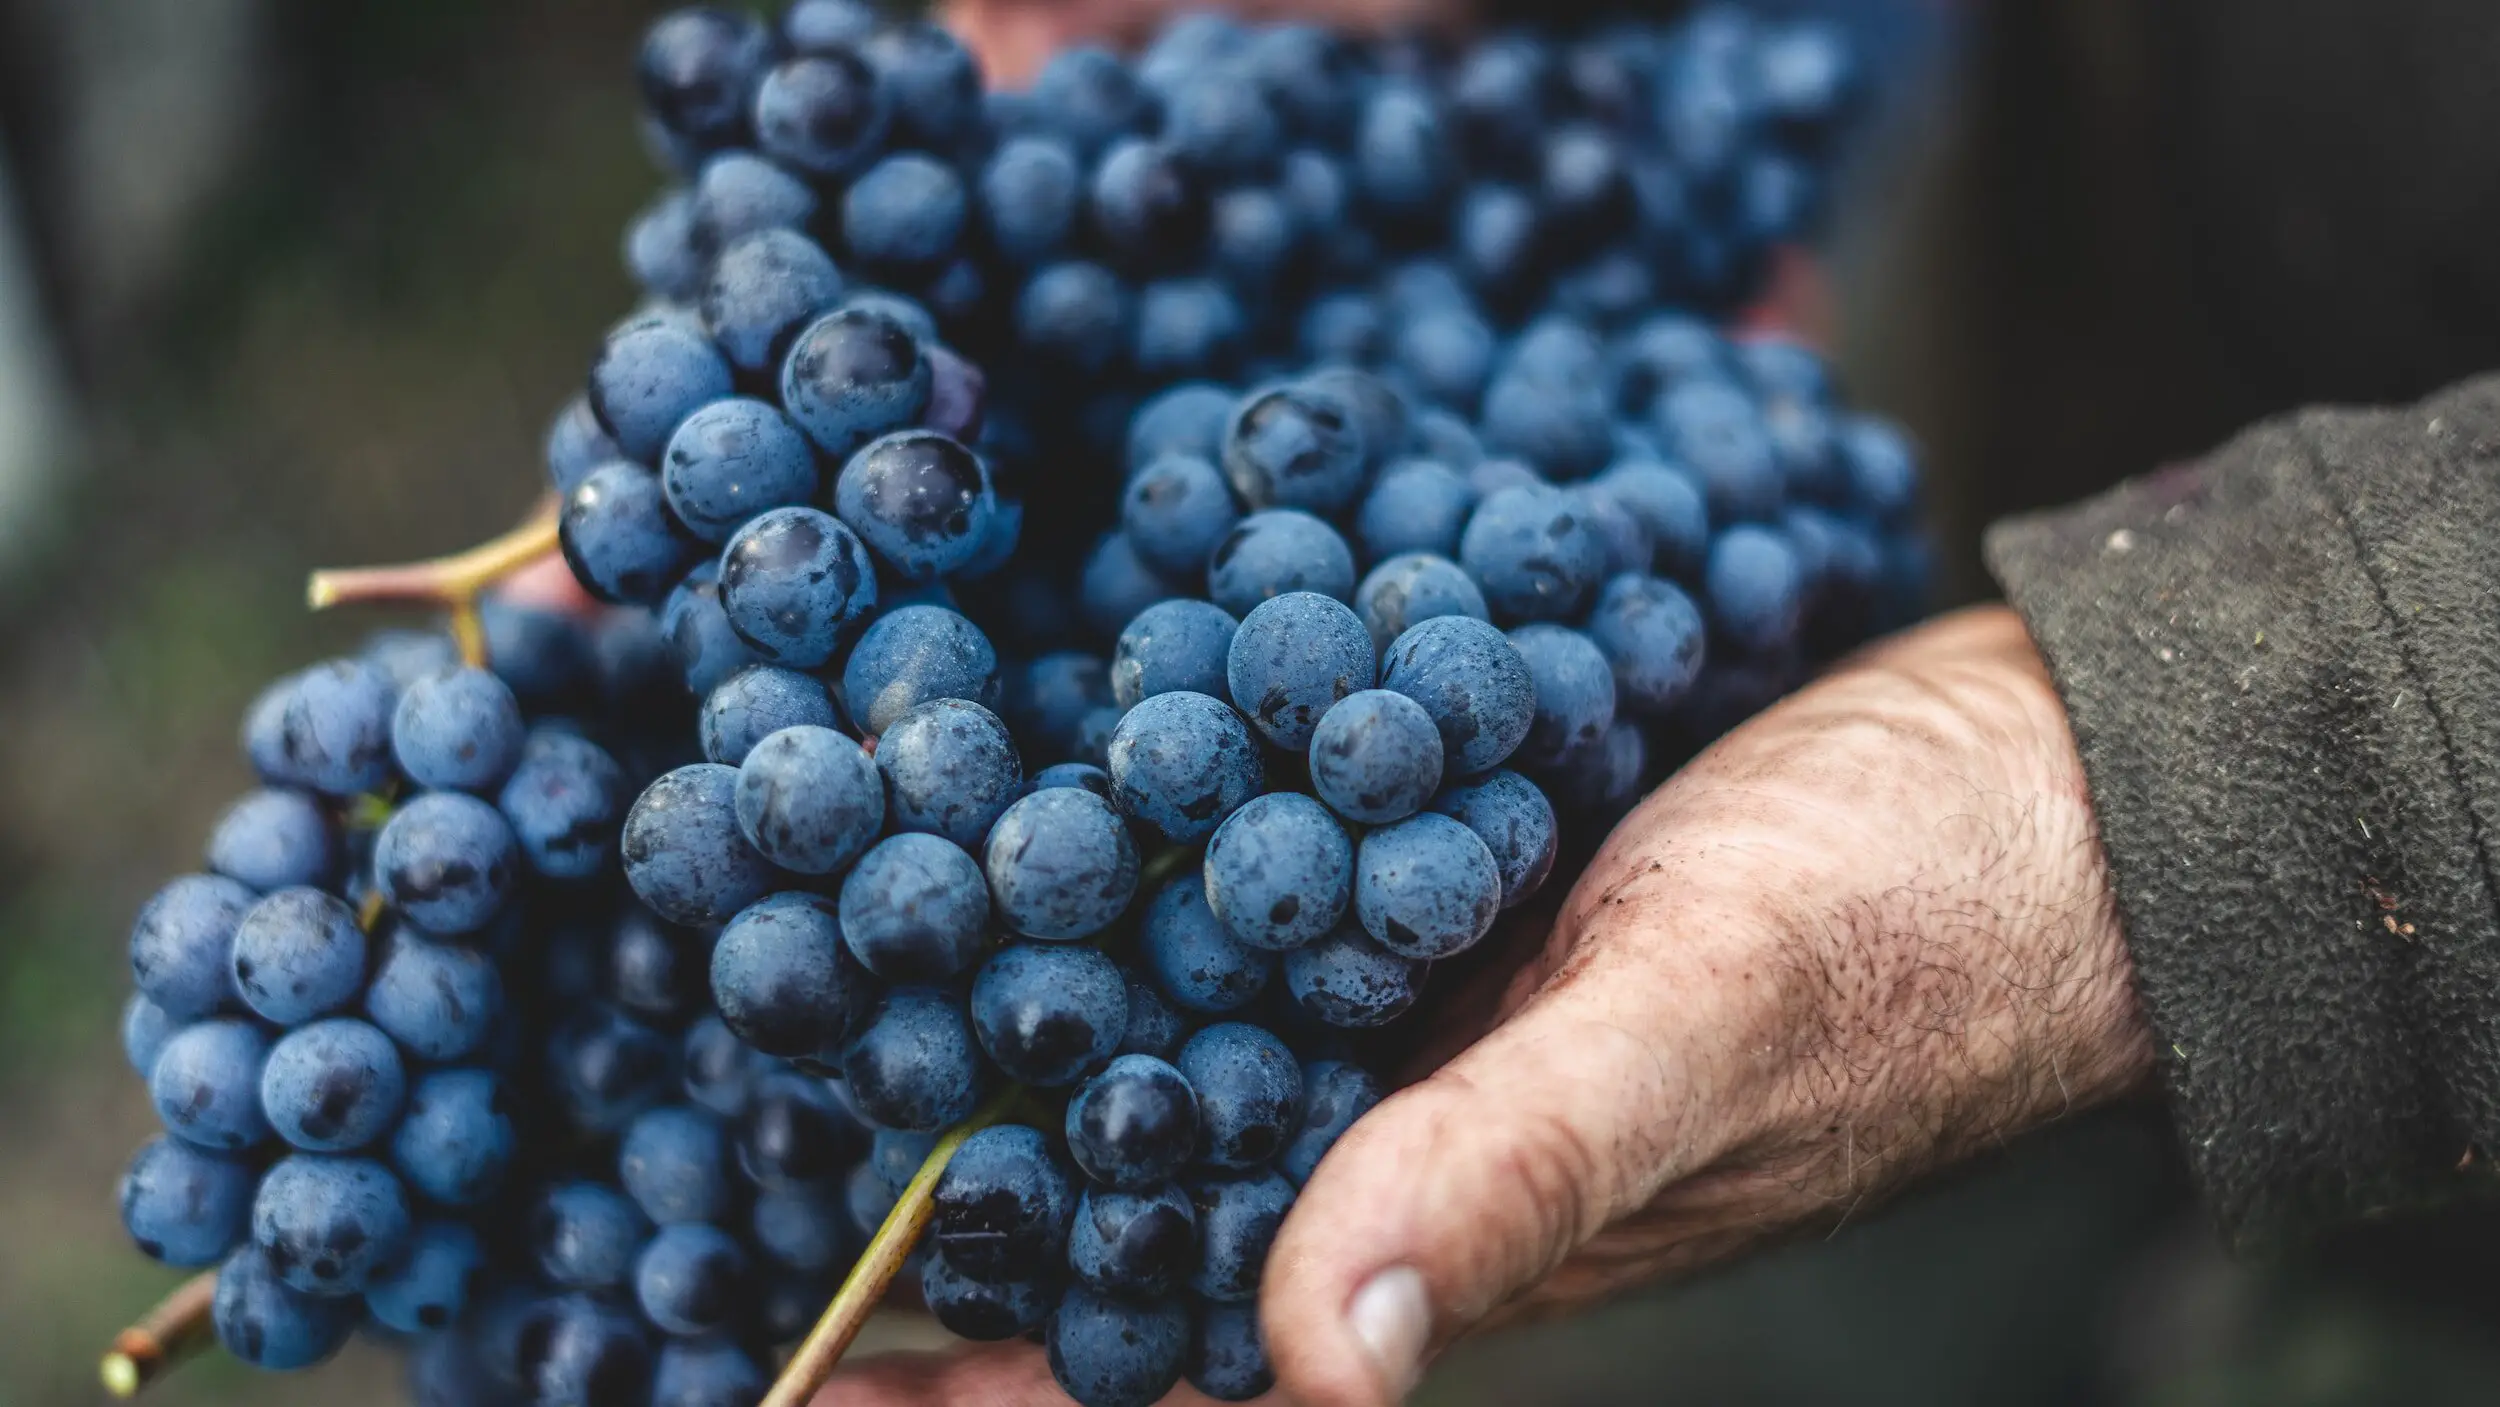 caberent sauvignon or cabernet franc - red grapes